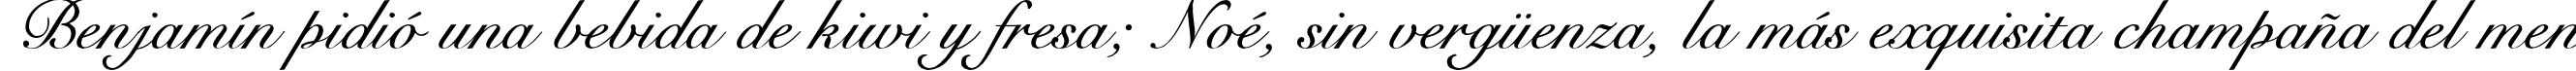 Пример написания шрифтом CygnetRound текста на испанском